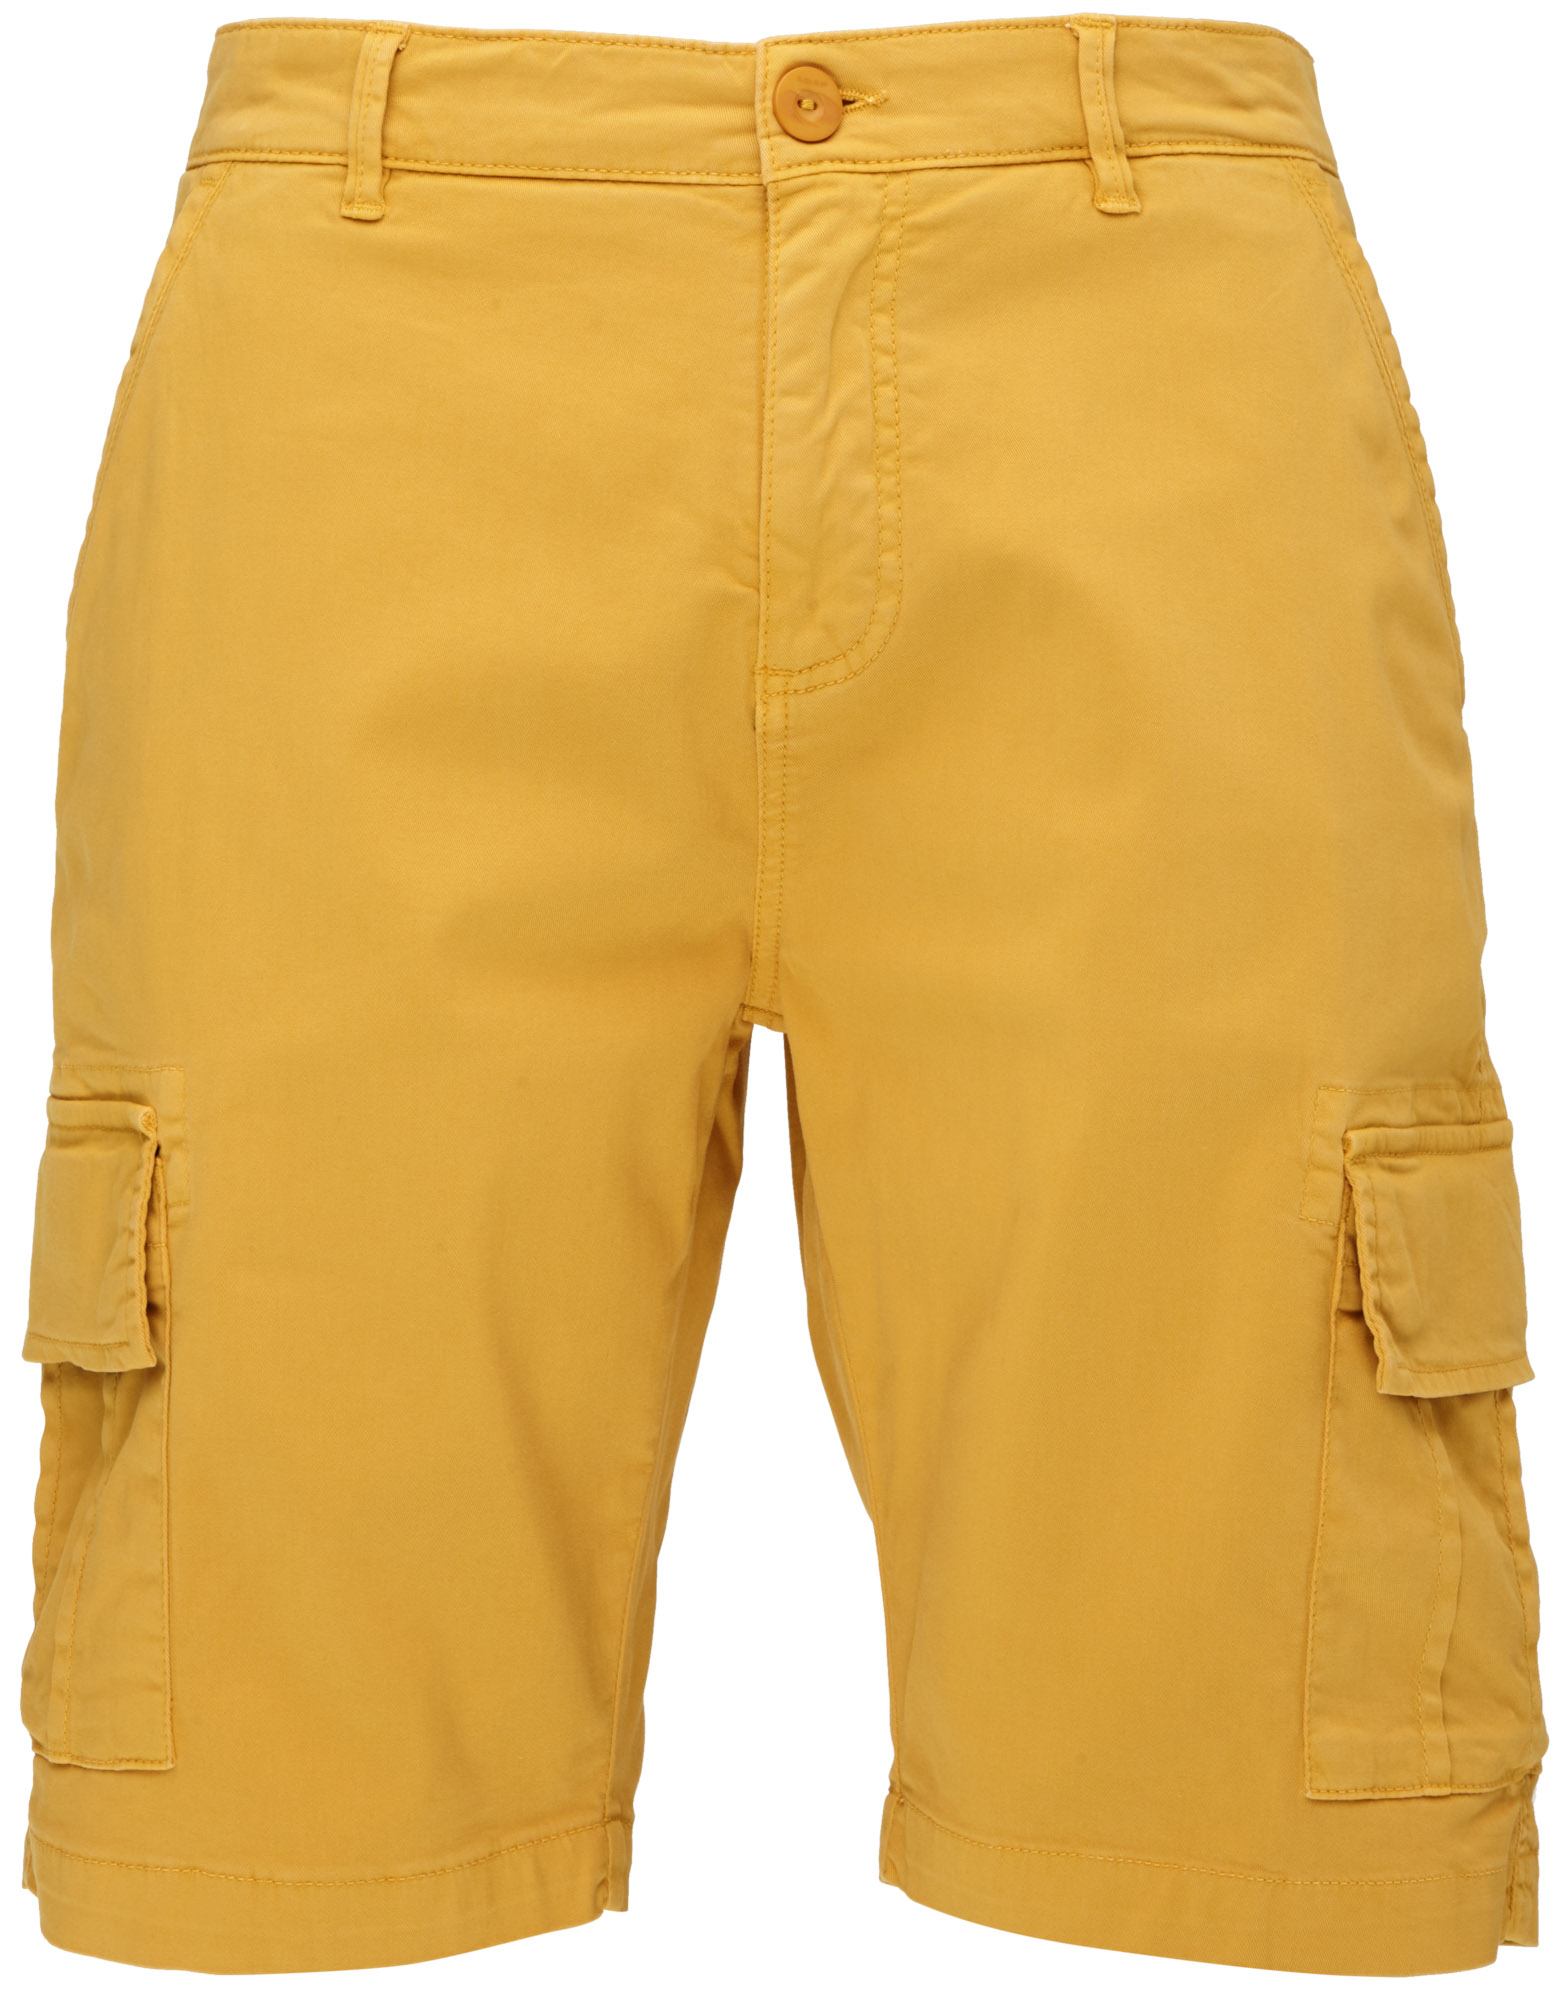 Men's shorts LOAP VANAS Yellow